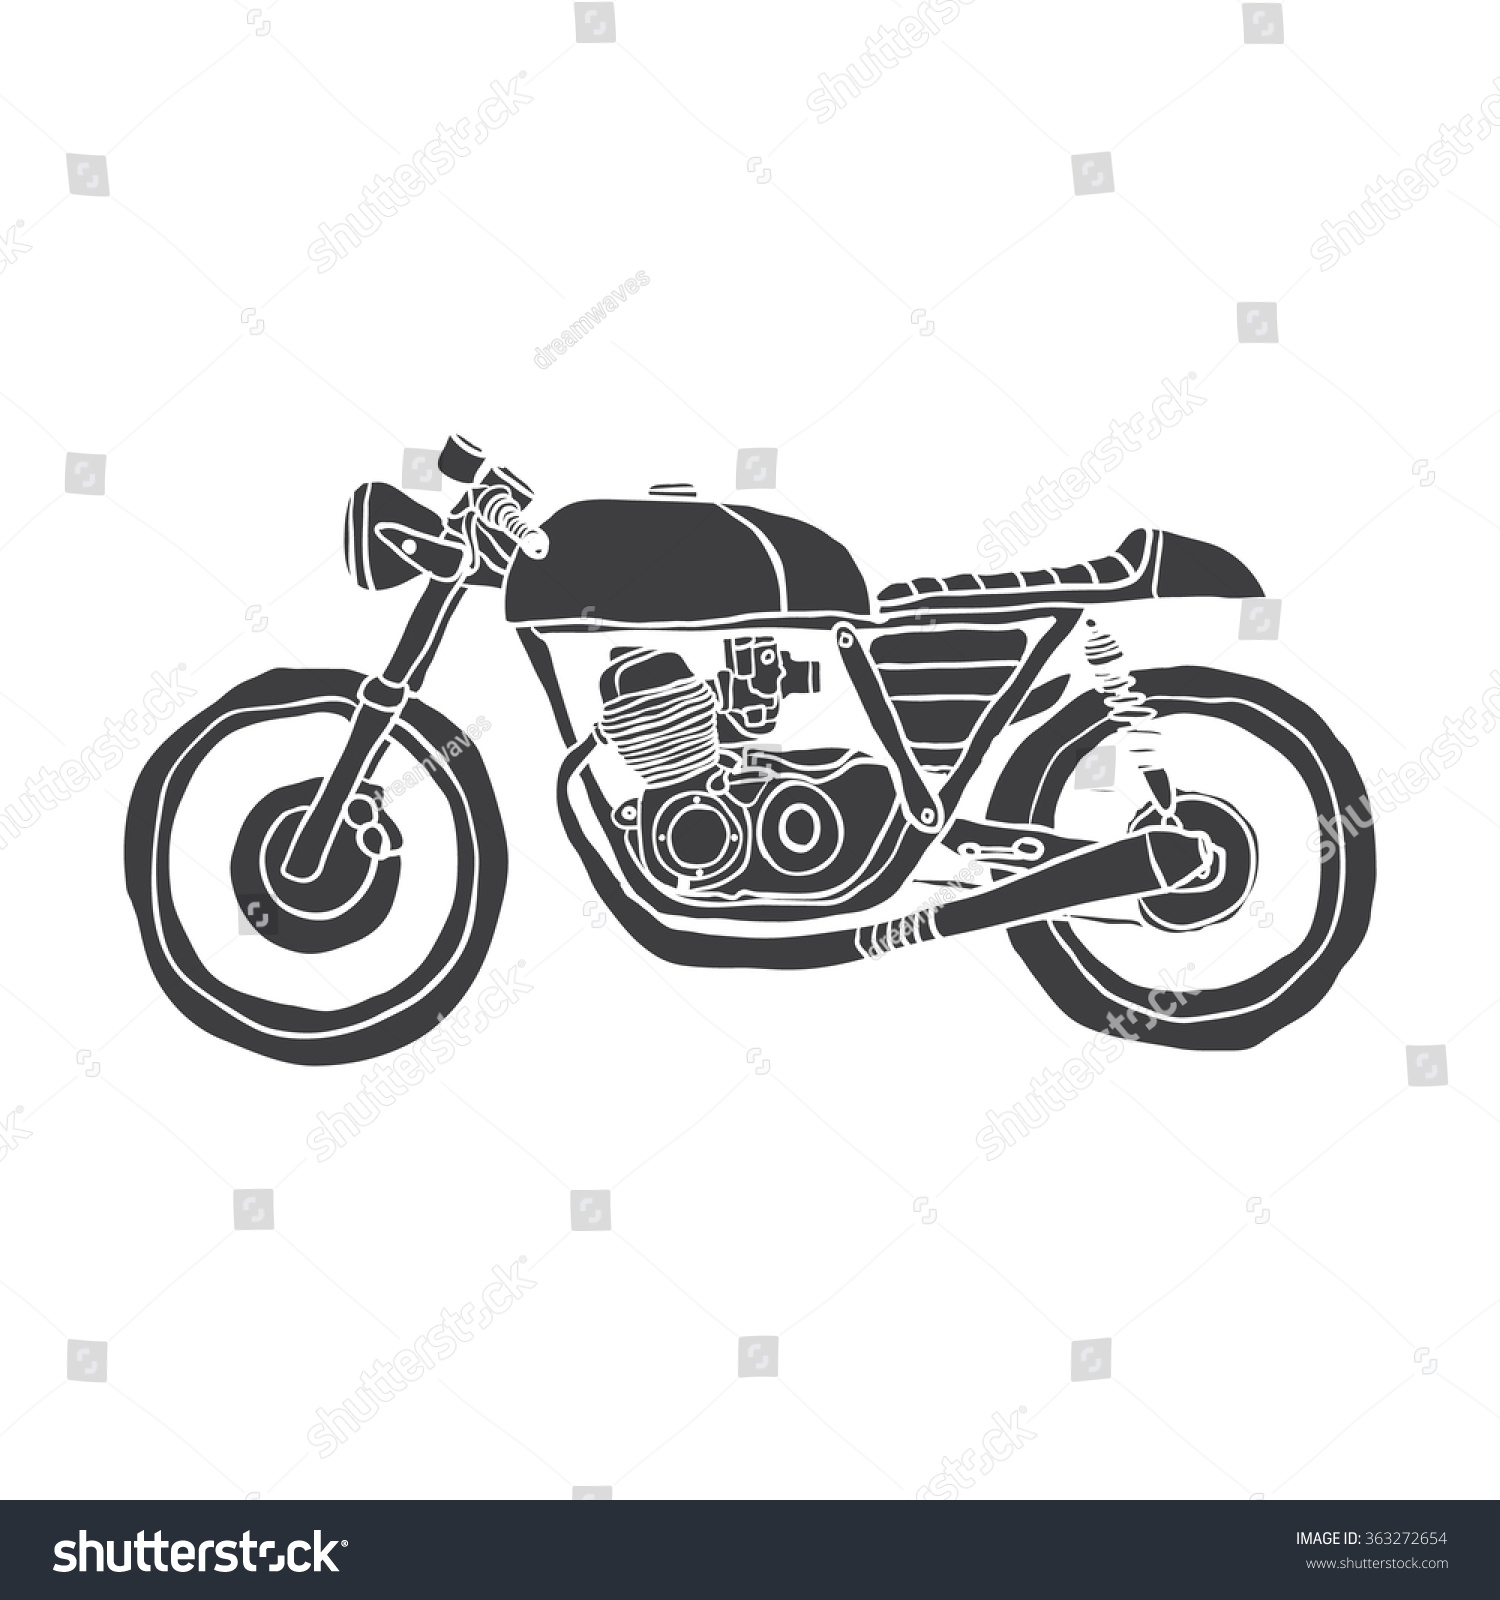 Cafe Racer Motorcycle Handdrawn Stock Vector 363272654 Shutterstock